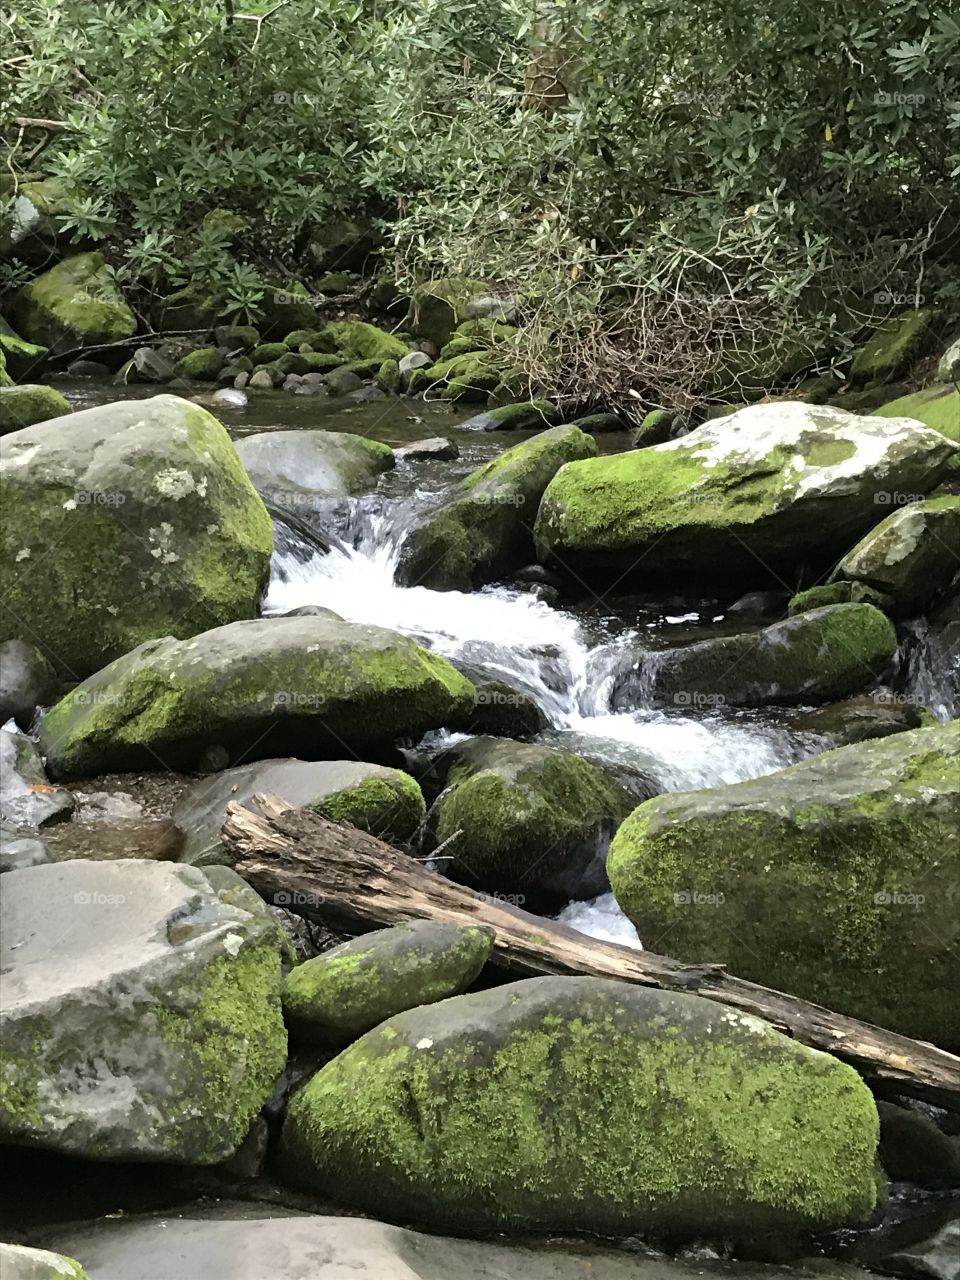 Rock, Water, Nature, River, Moss